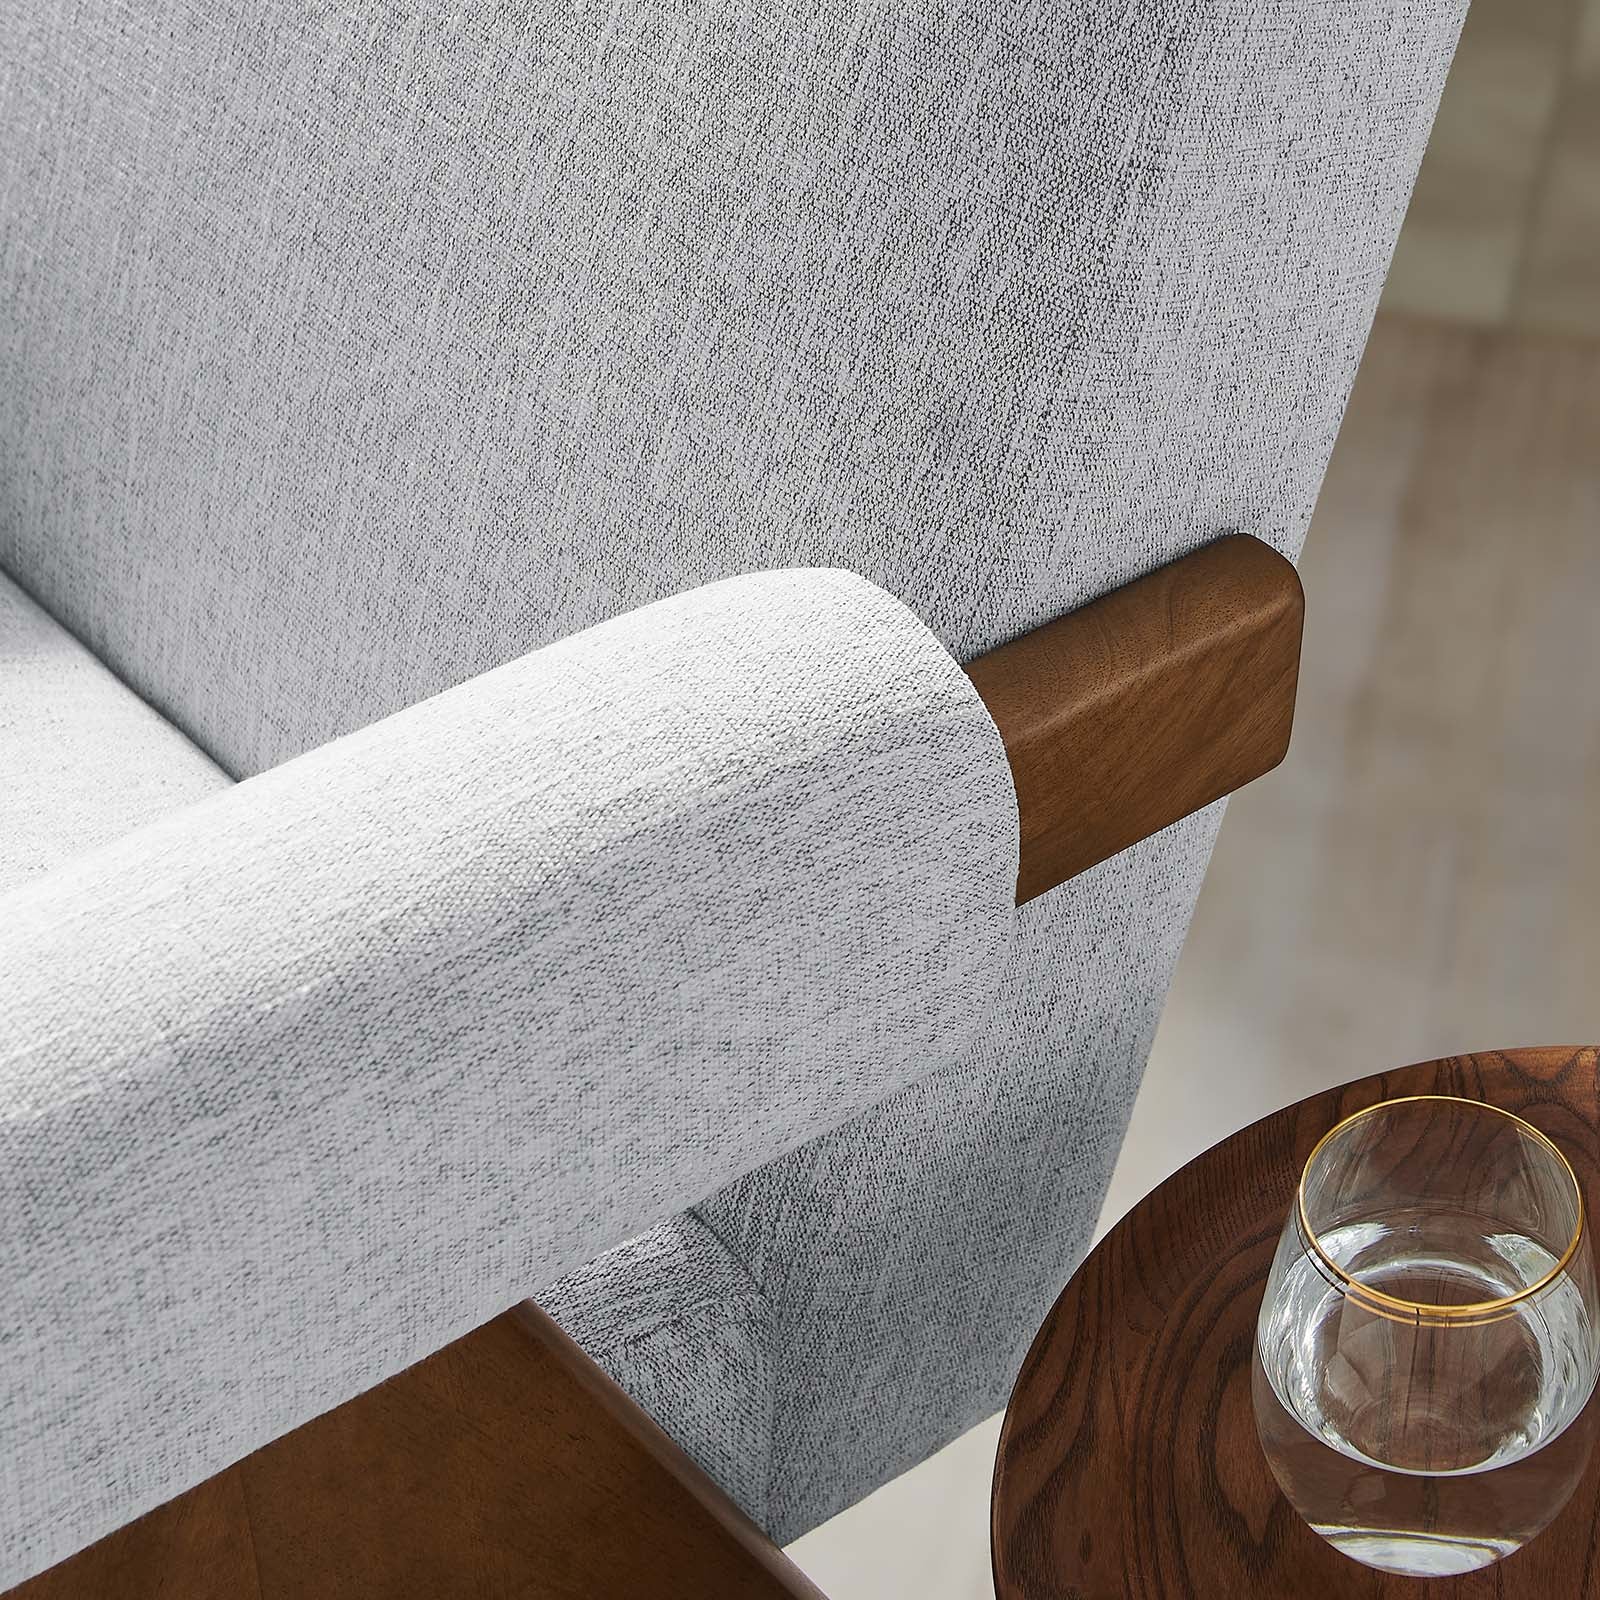 Lyra Fabric Armchair - East Shore Modern Home Furnishings